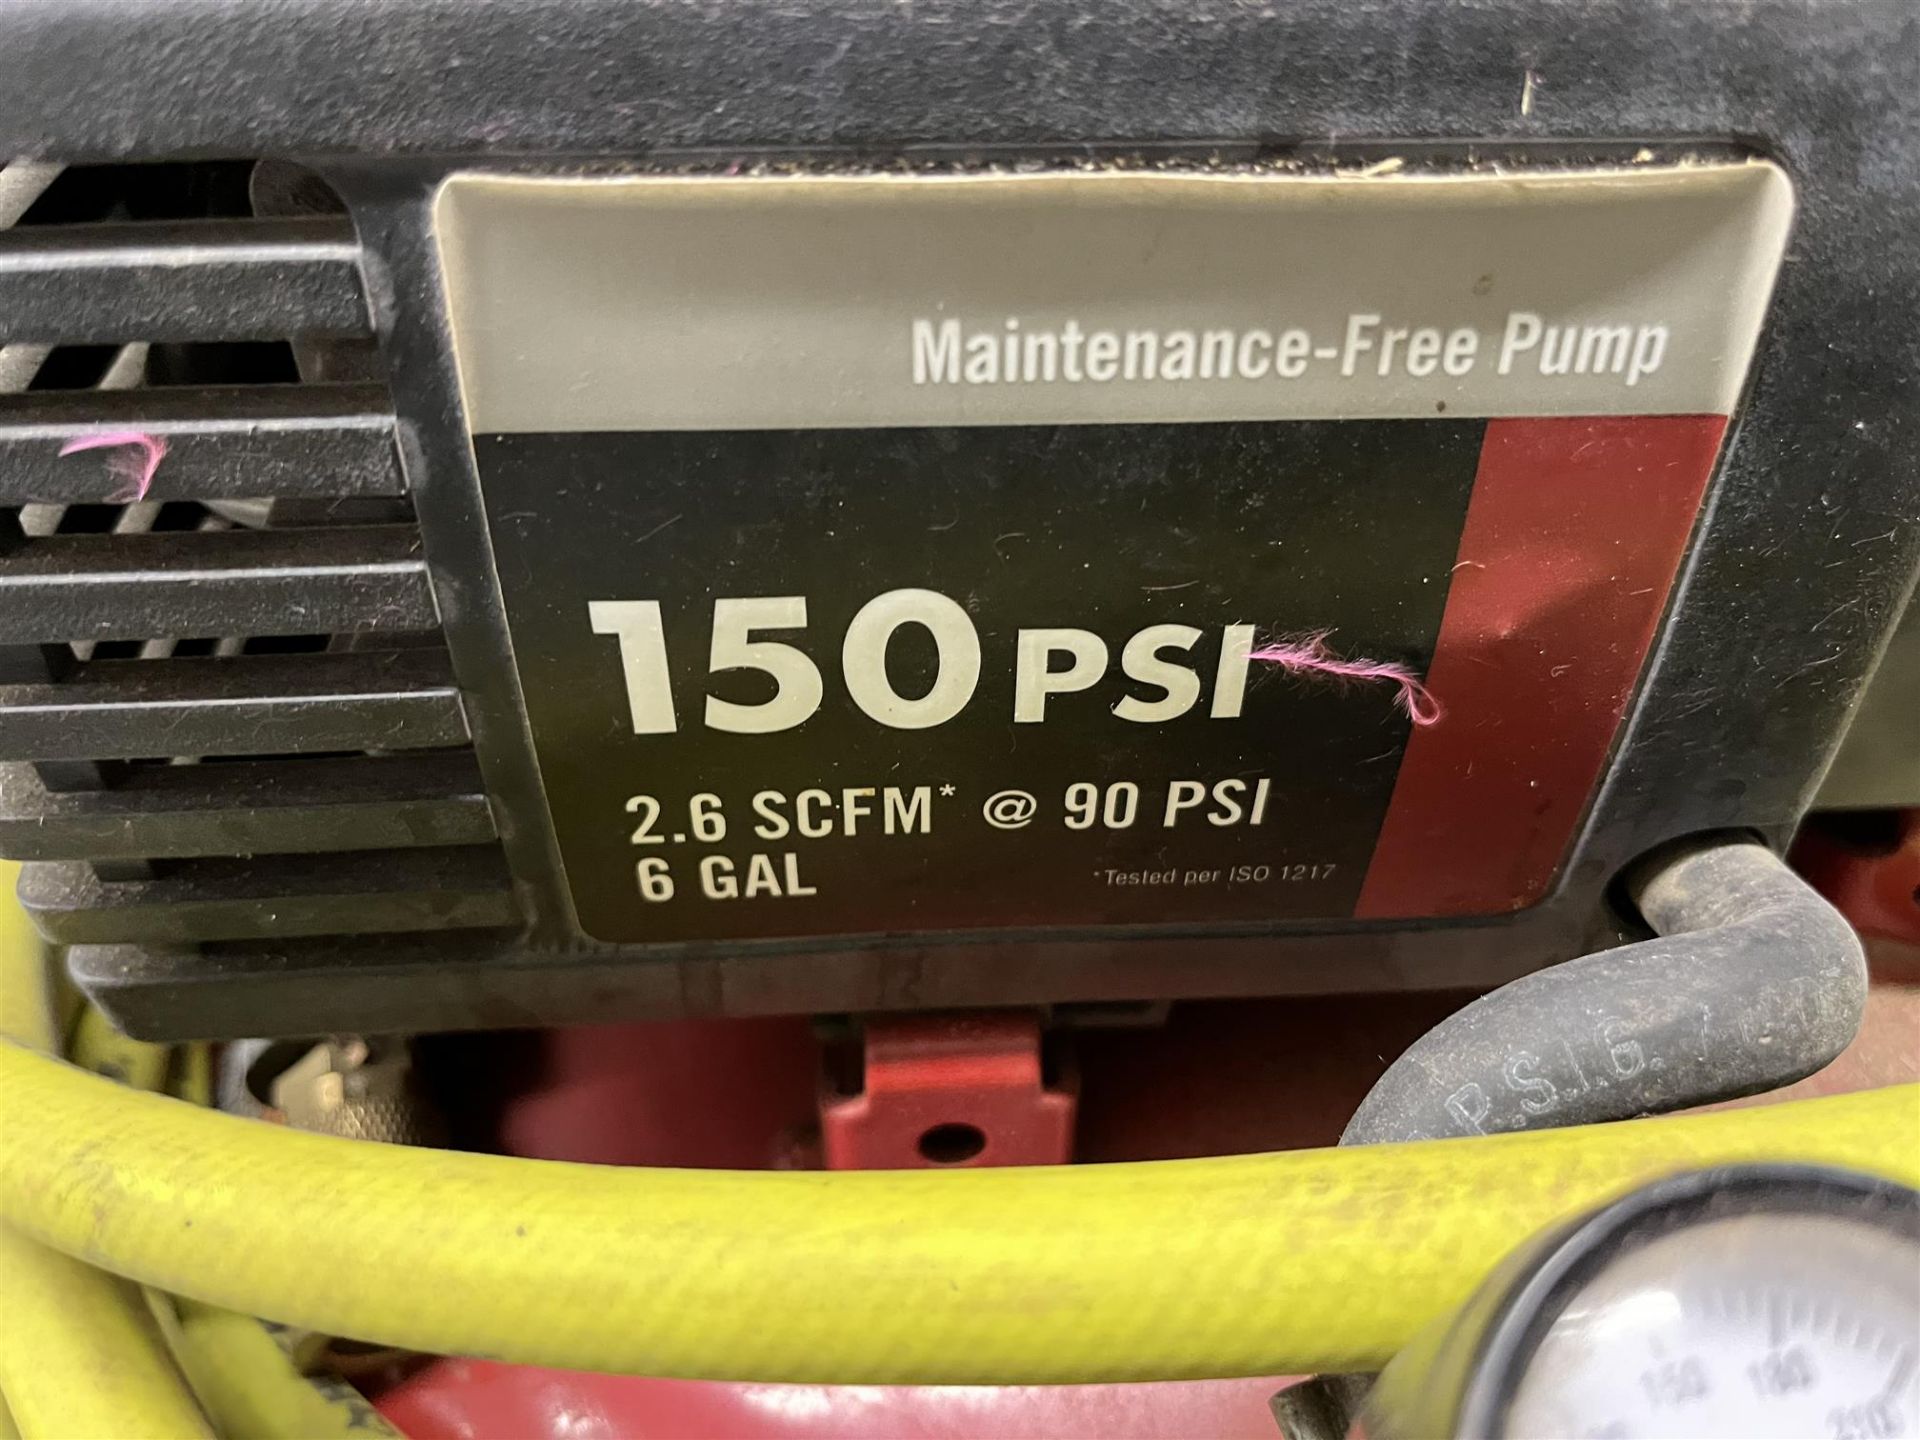 PORTERCABLE - Maintenance-Free Pump - 150PSI, 2.6 SCFM @ 90 PSI, 6 GAL - Image 3 of 3